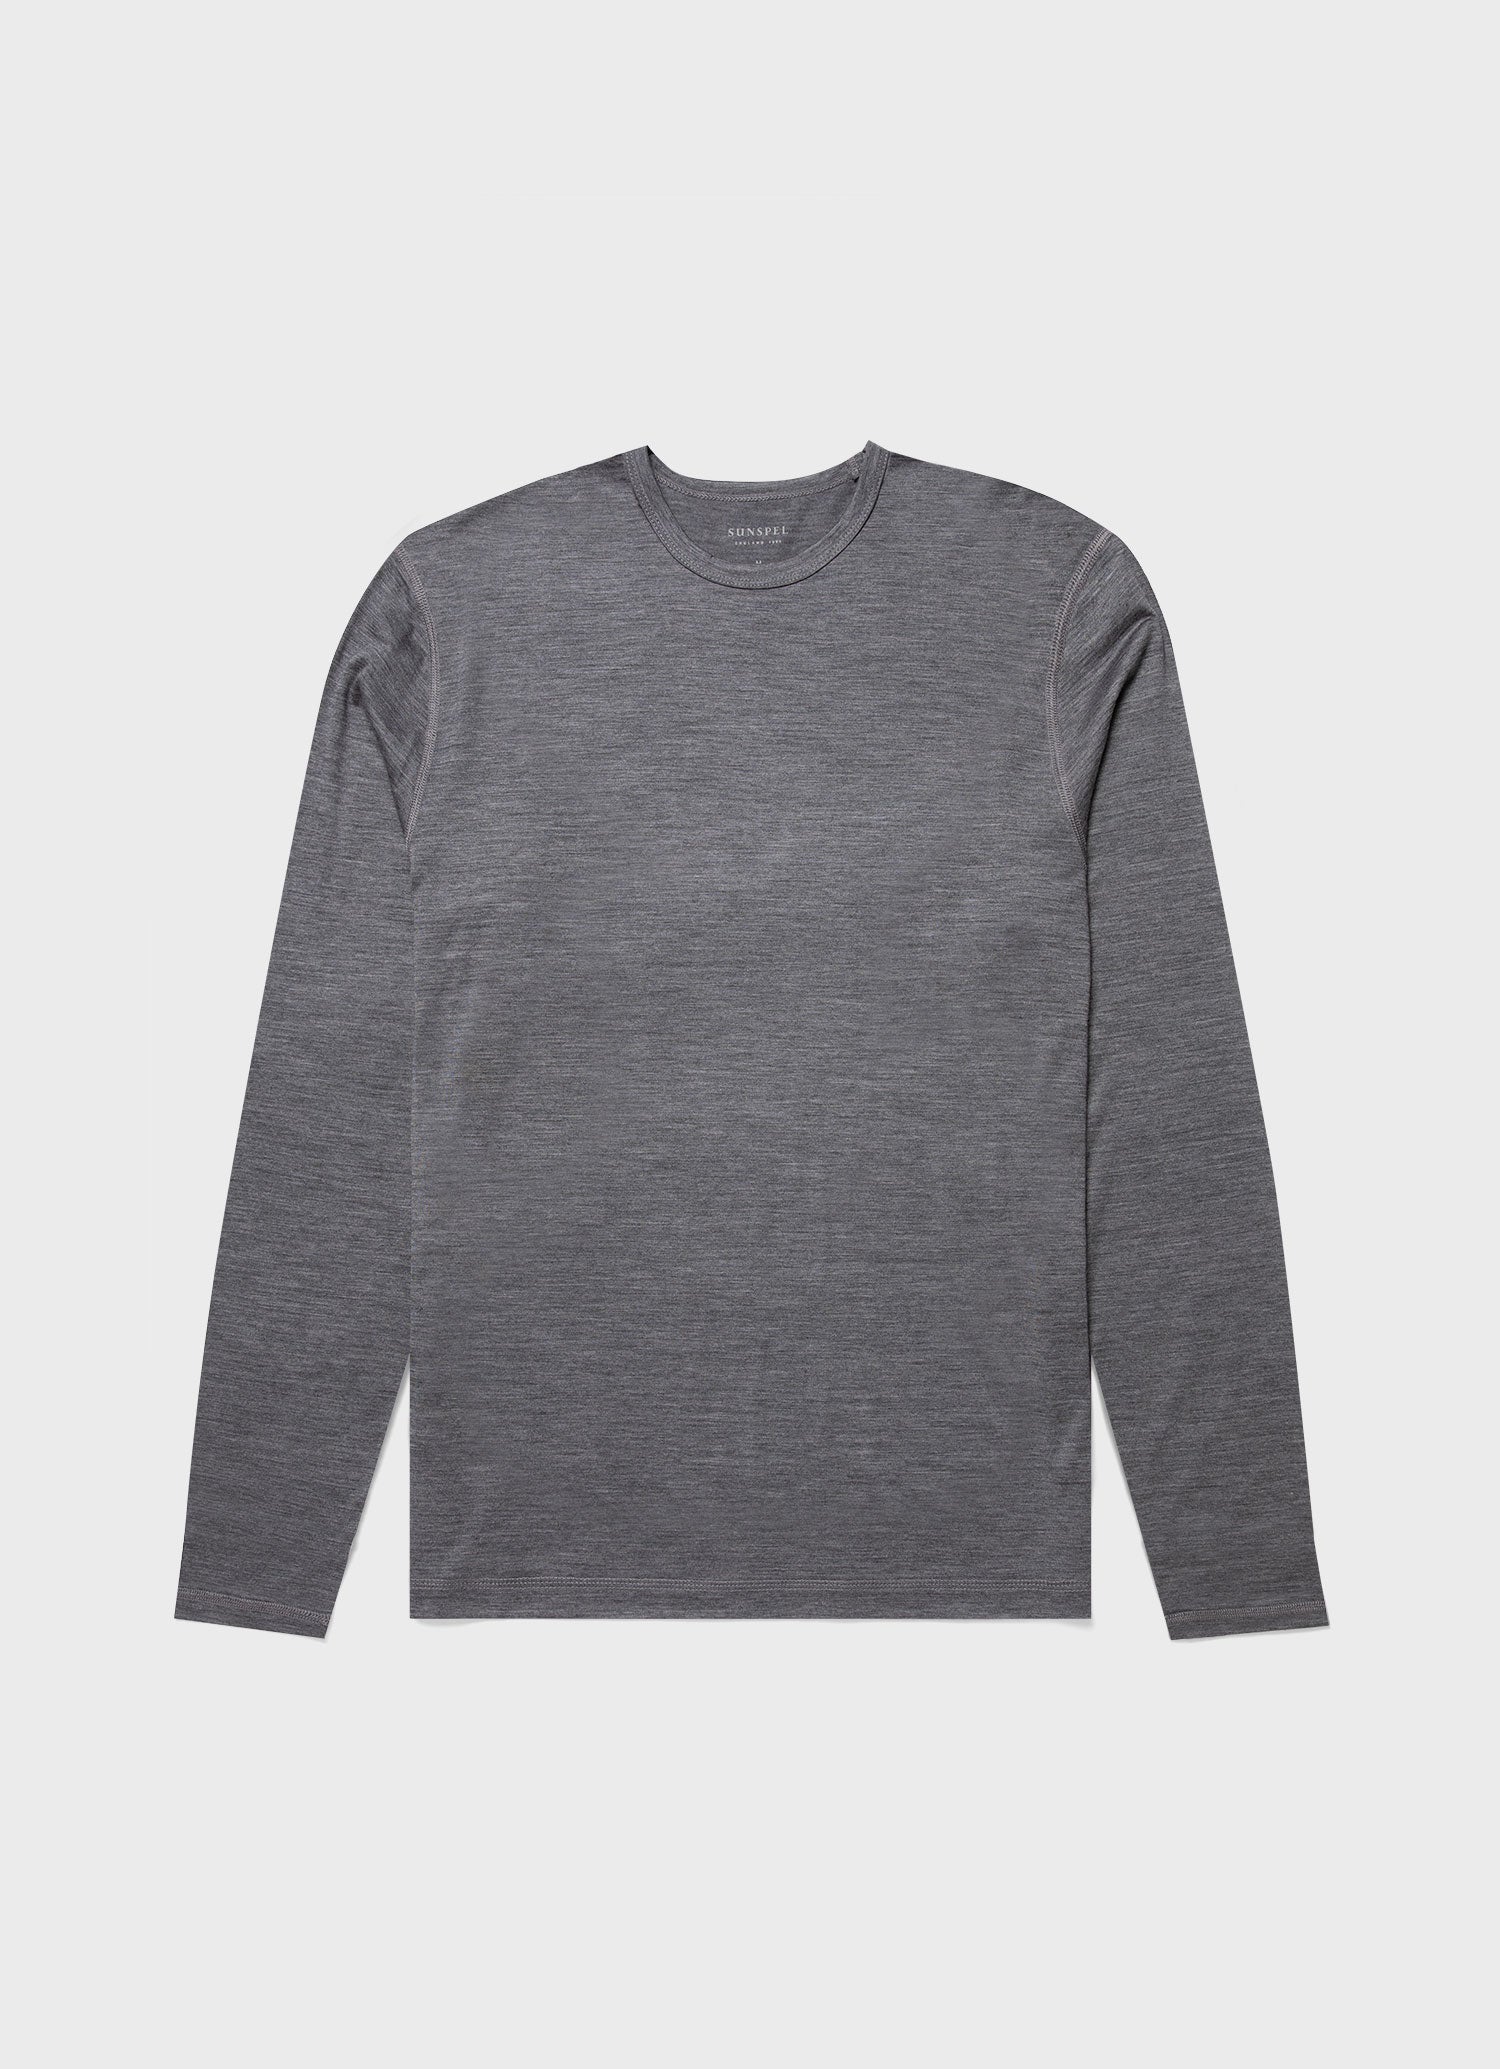 Long Sleeve Thermal Merino T-shirt